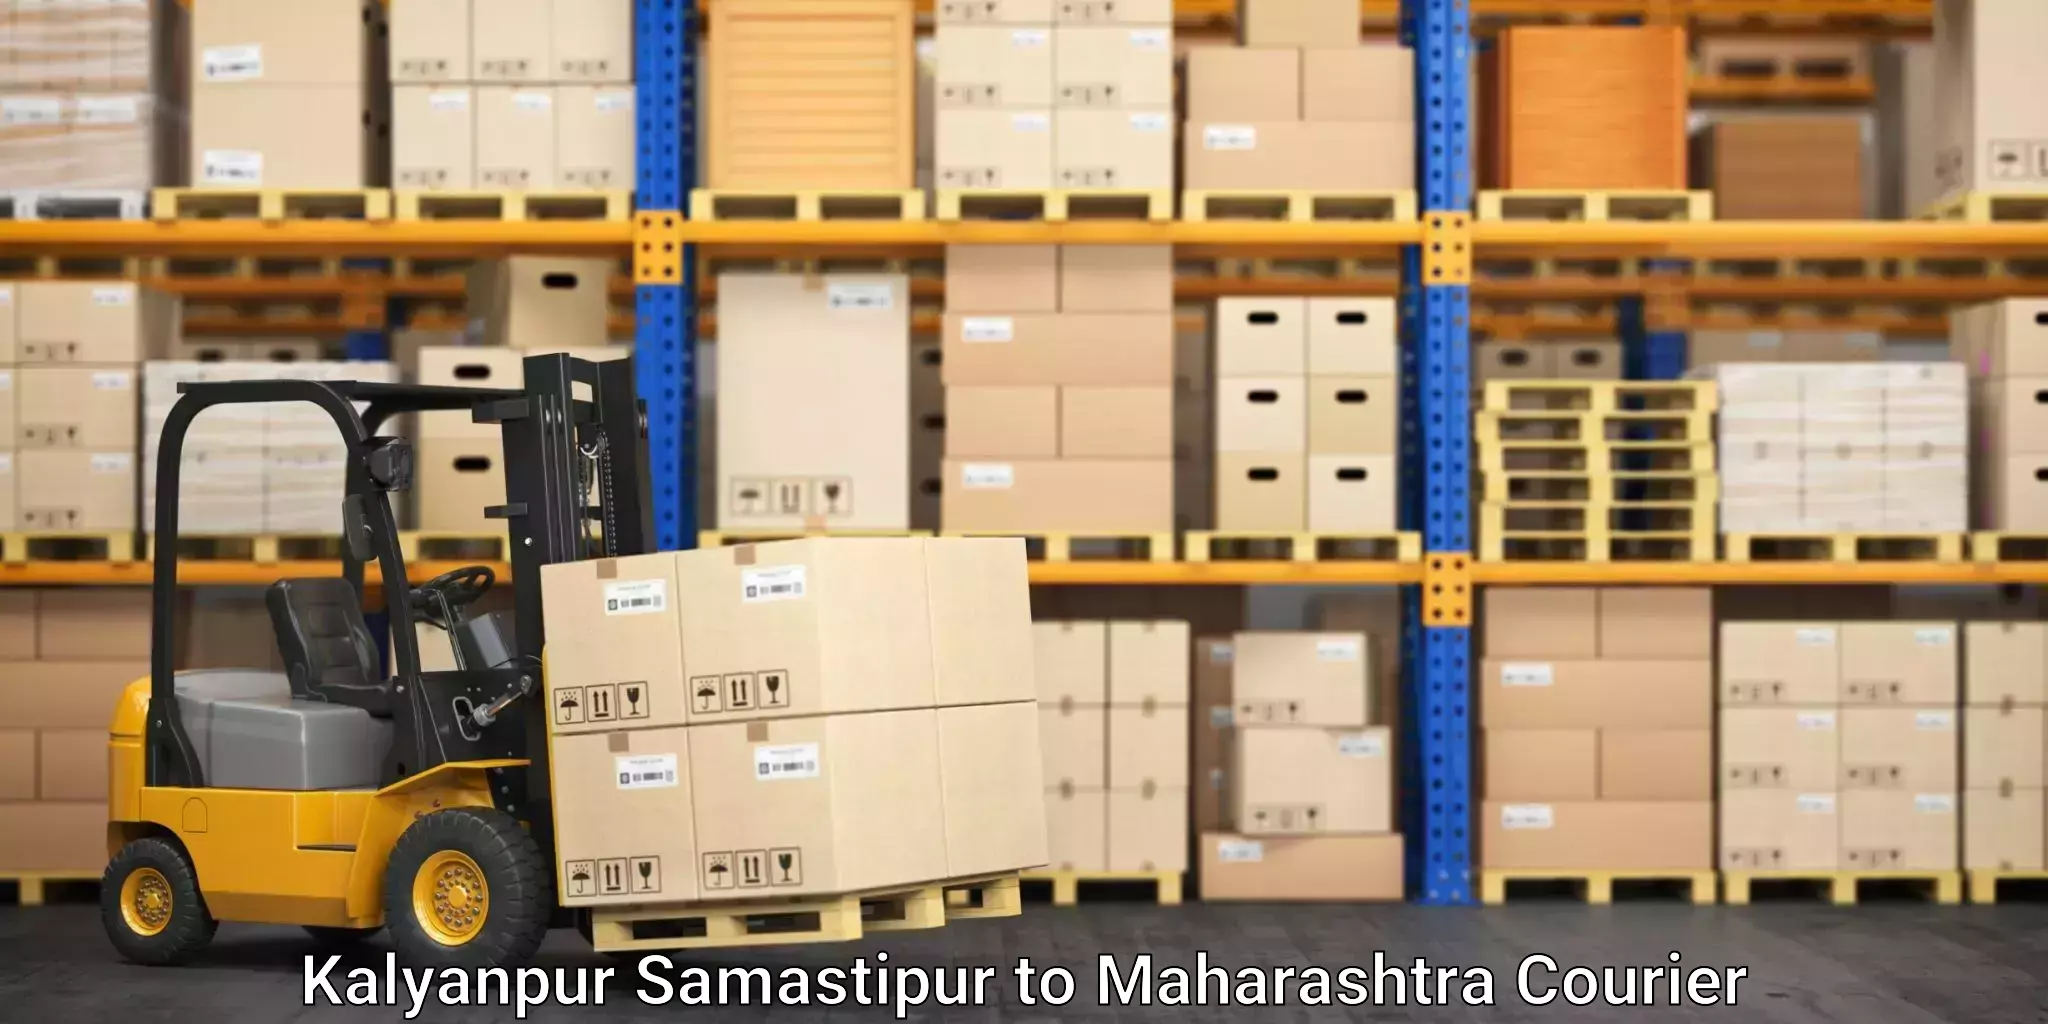 Furniture transport company Kalyanpur Samastipur to Lonikand